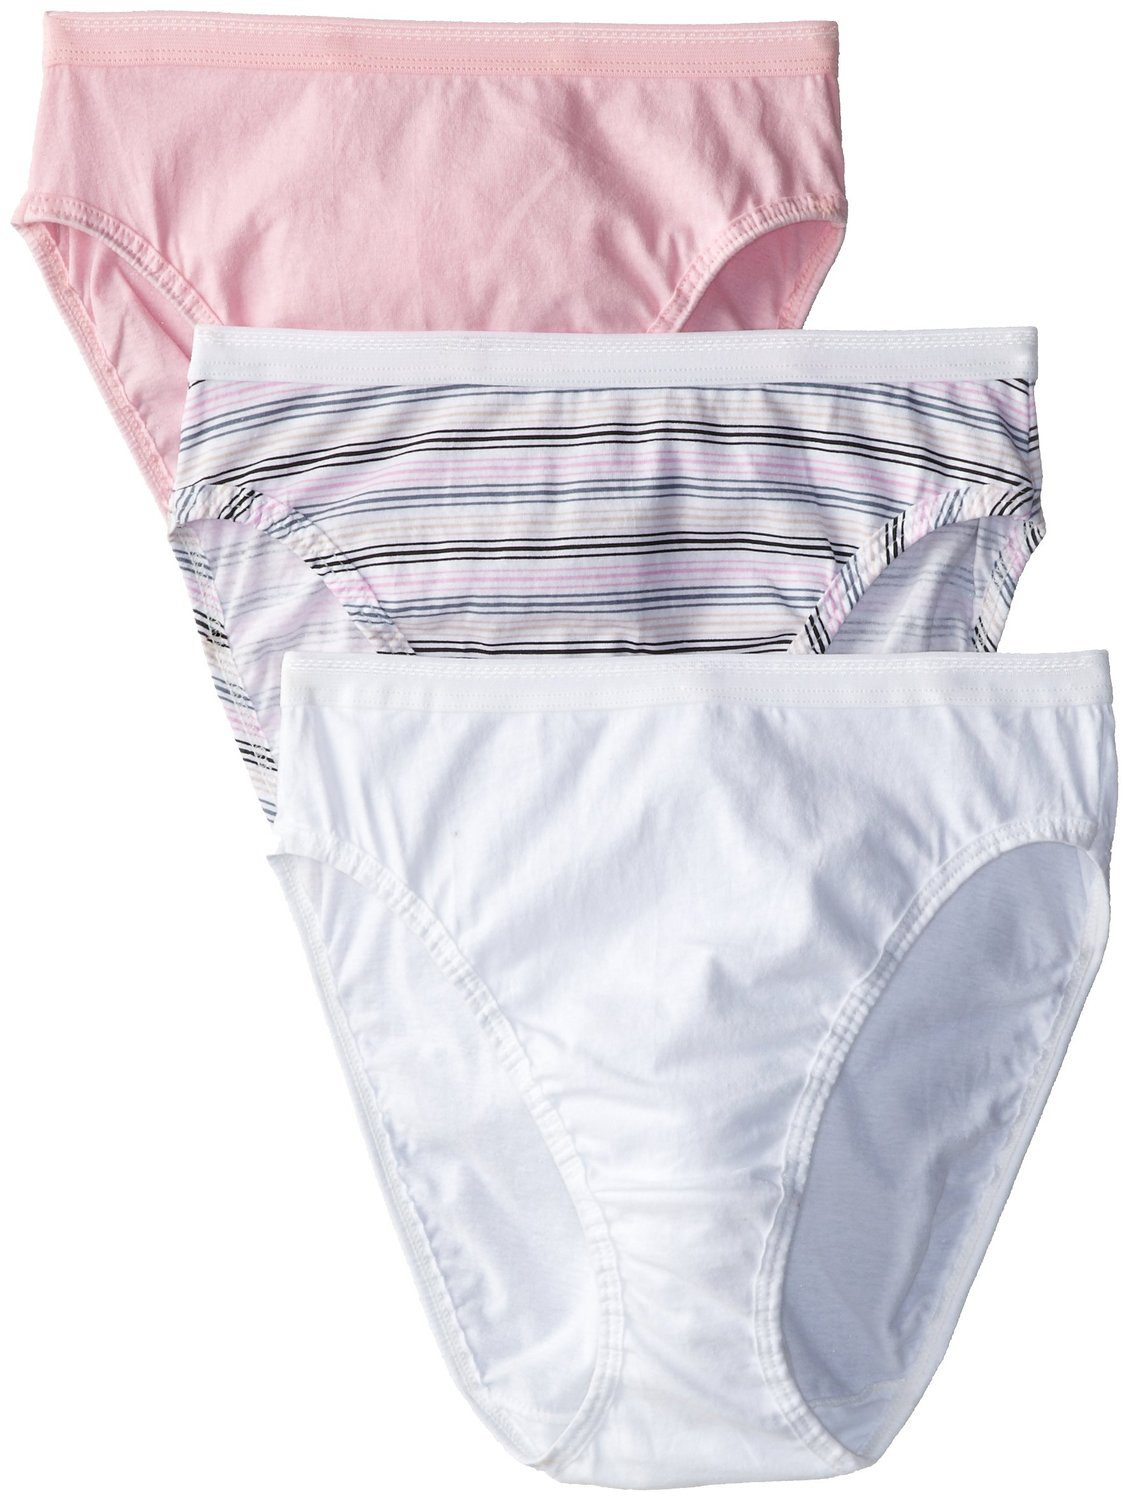 Women's Cotton Hi-Cut Panty, Assorted 3 Pack